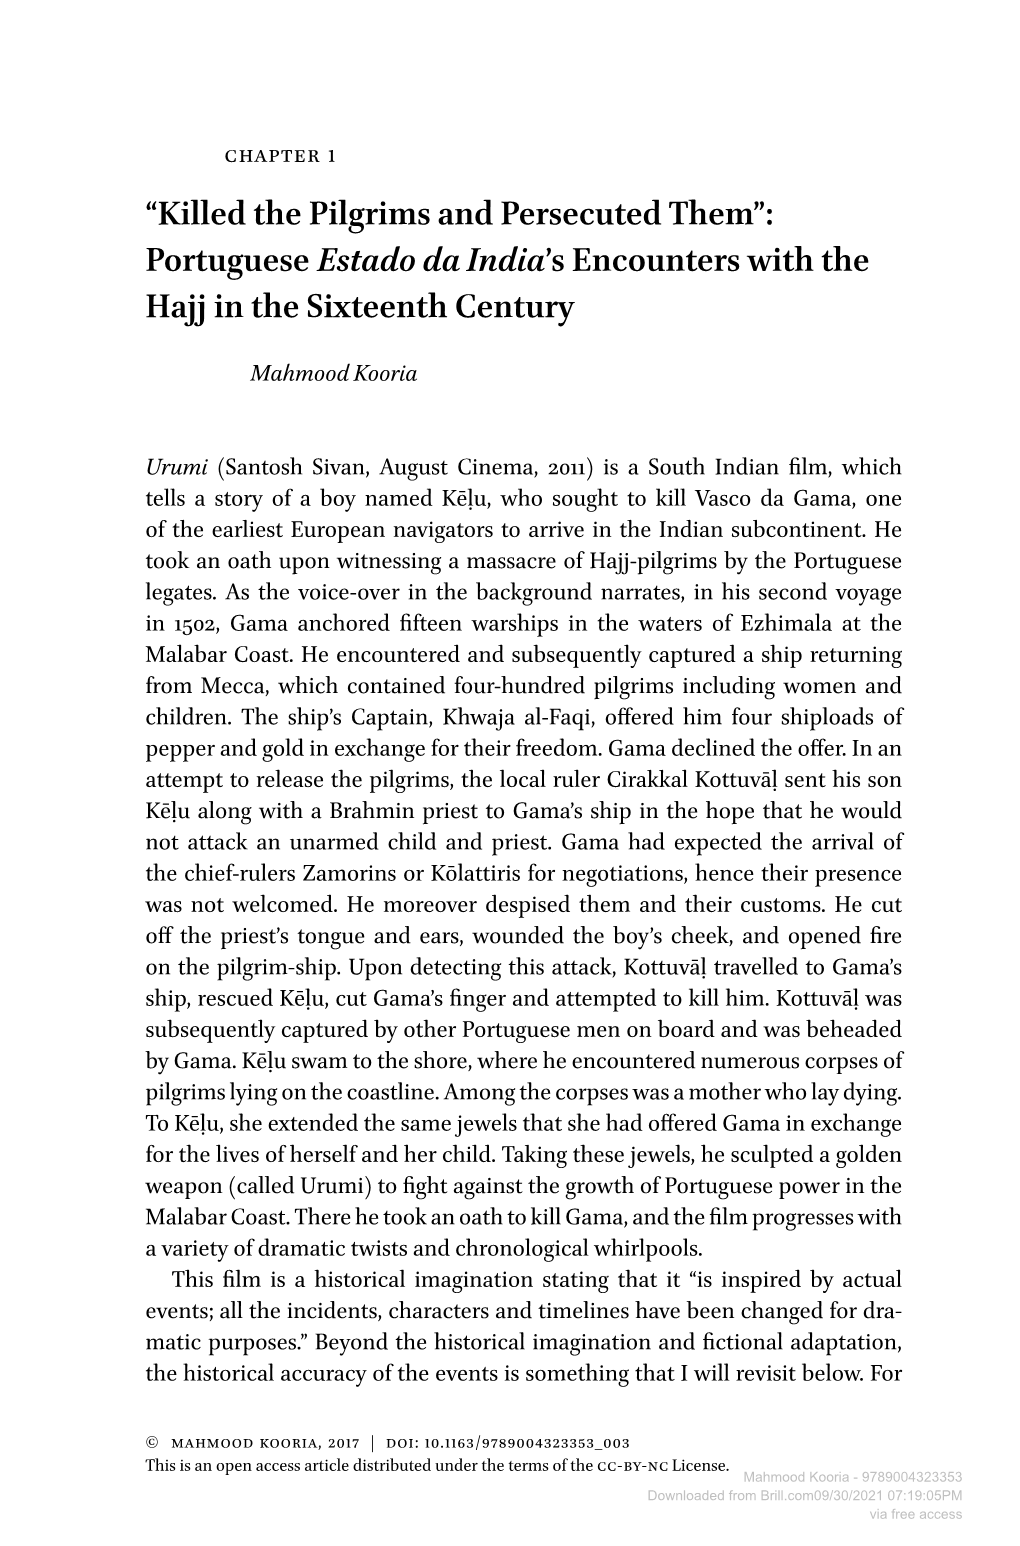 Portuguese Estadodaindia's Encounters with the Hajj in The